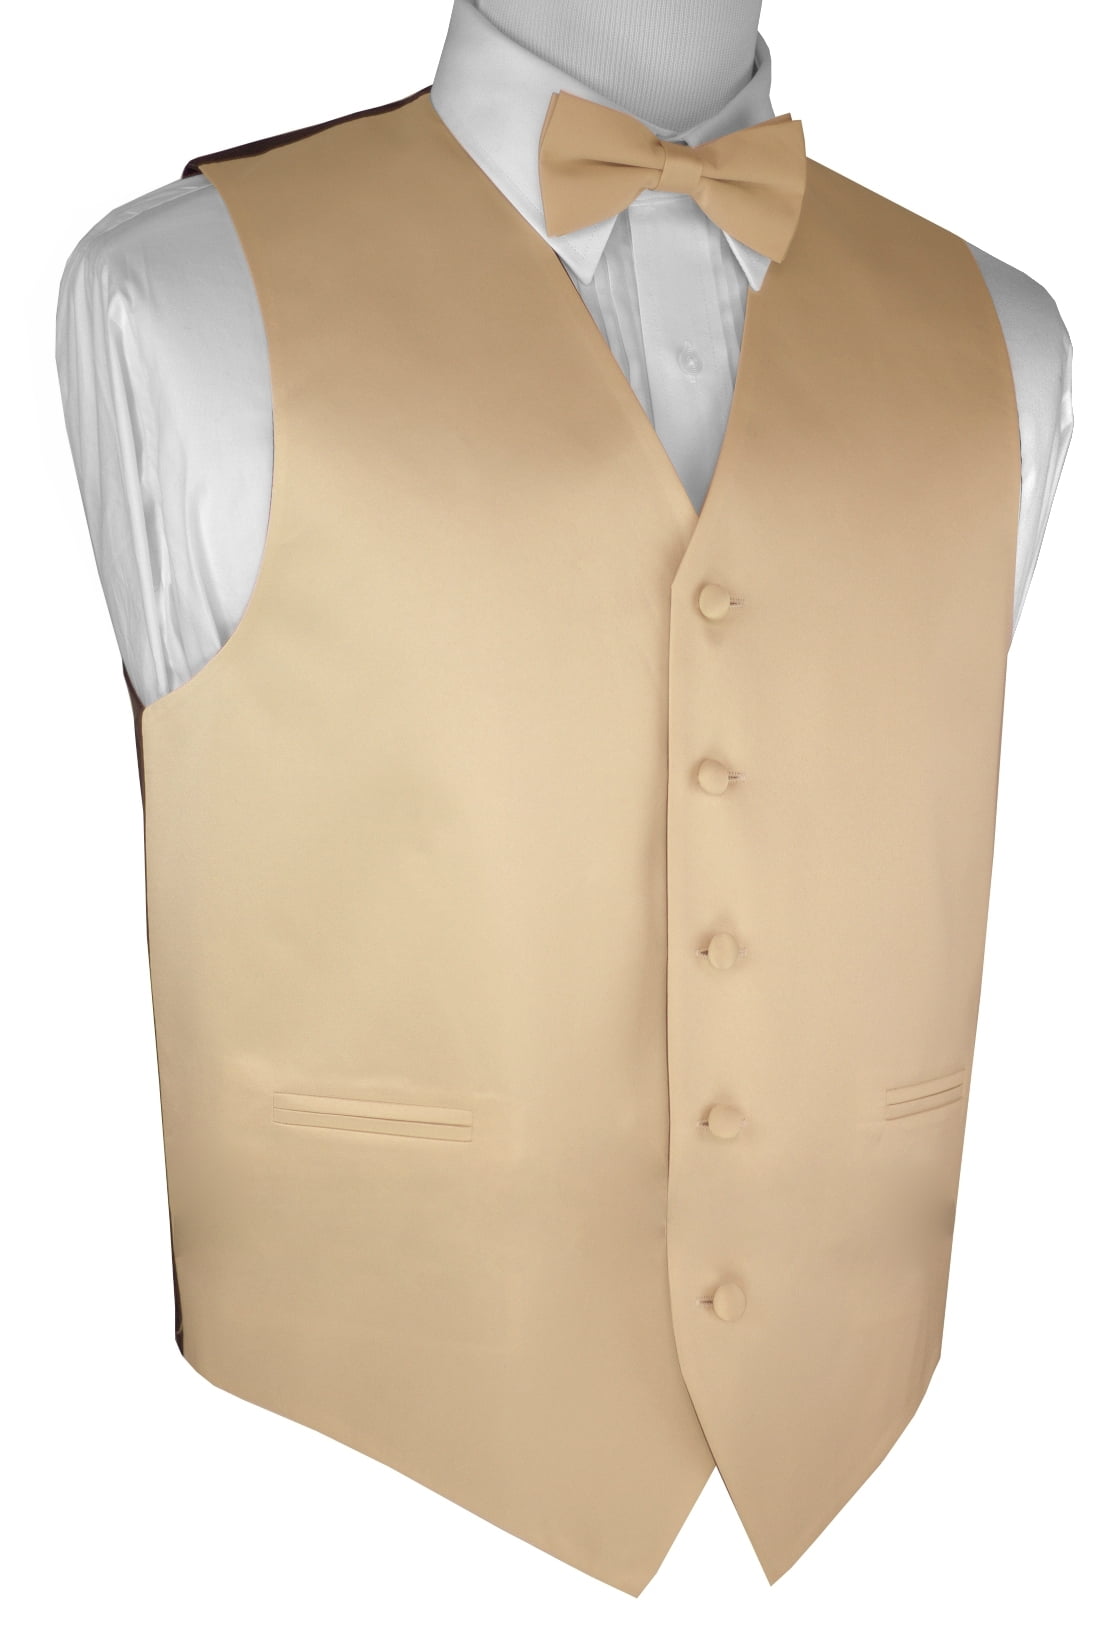 Bow Tie Men’s 4 Piece Tuxedo Vest Set including Vest Handkerchief and Tie V4 